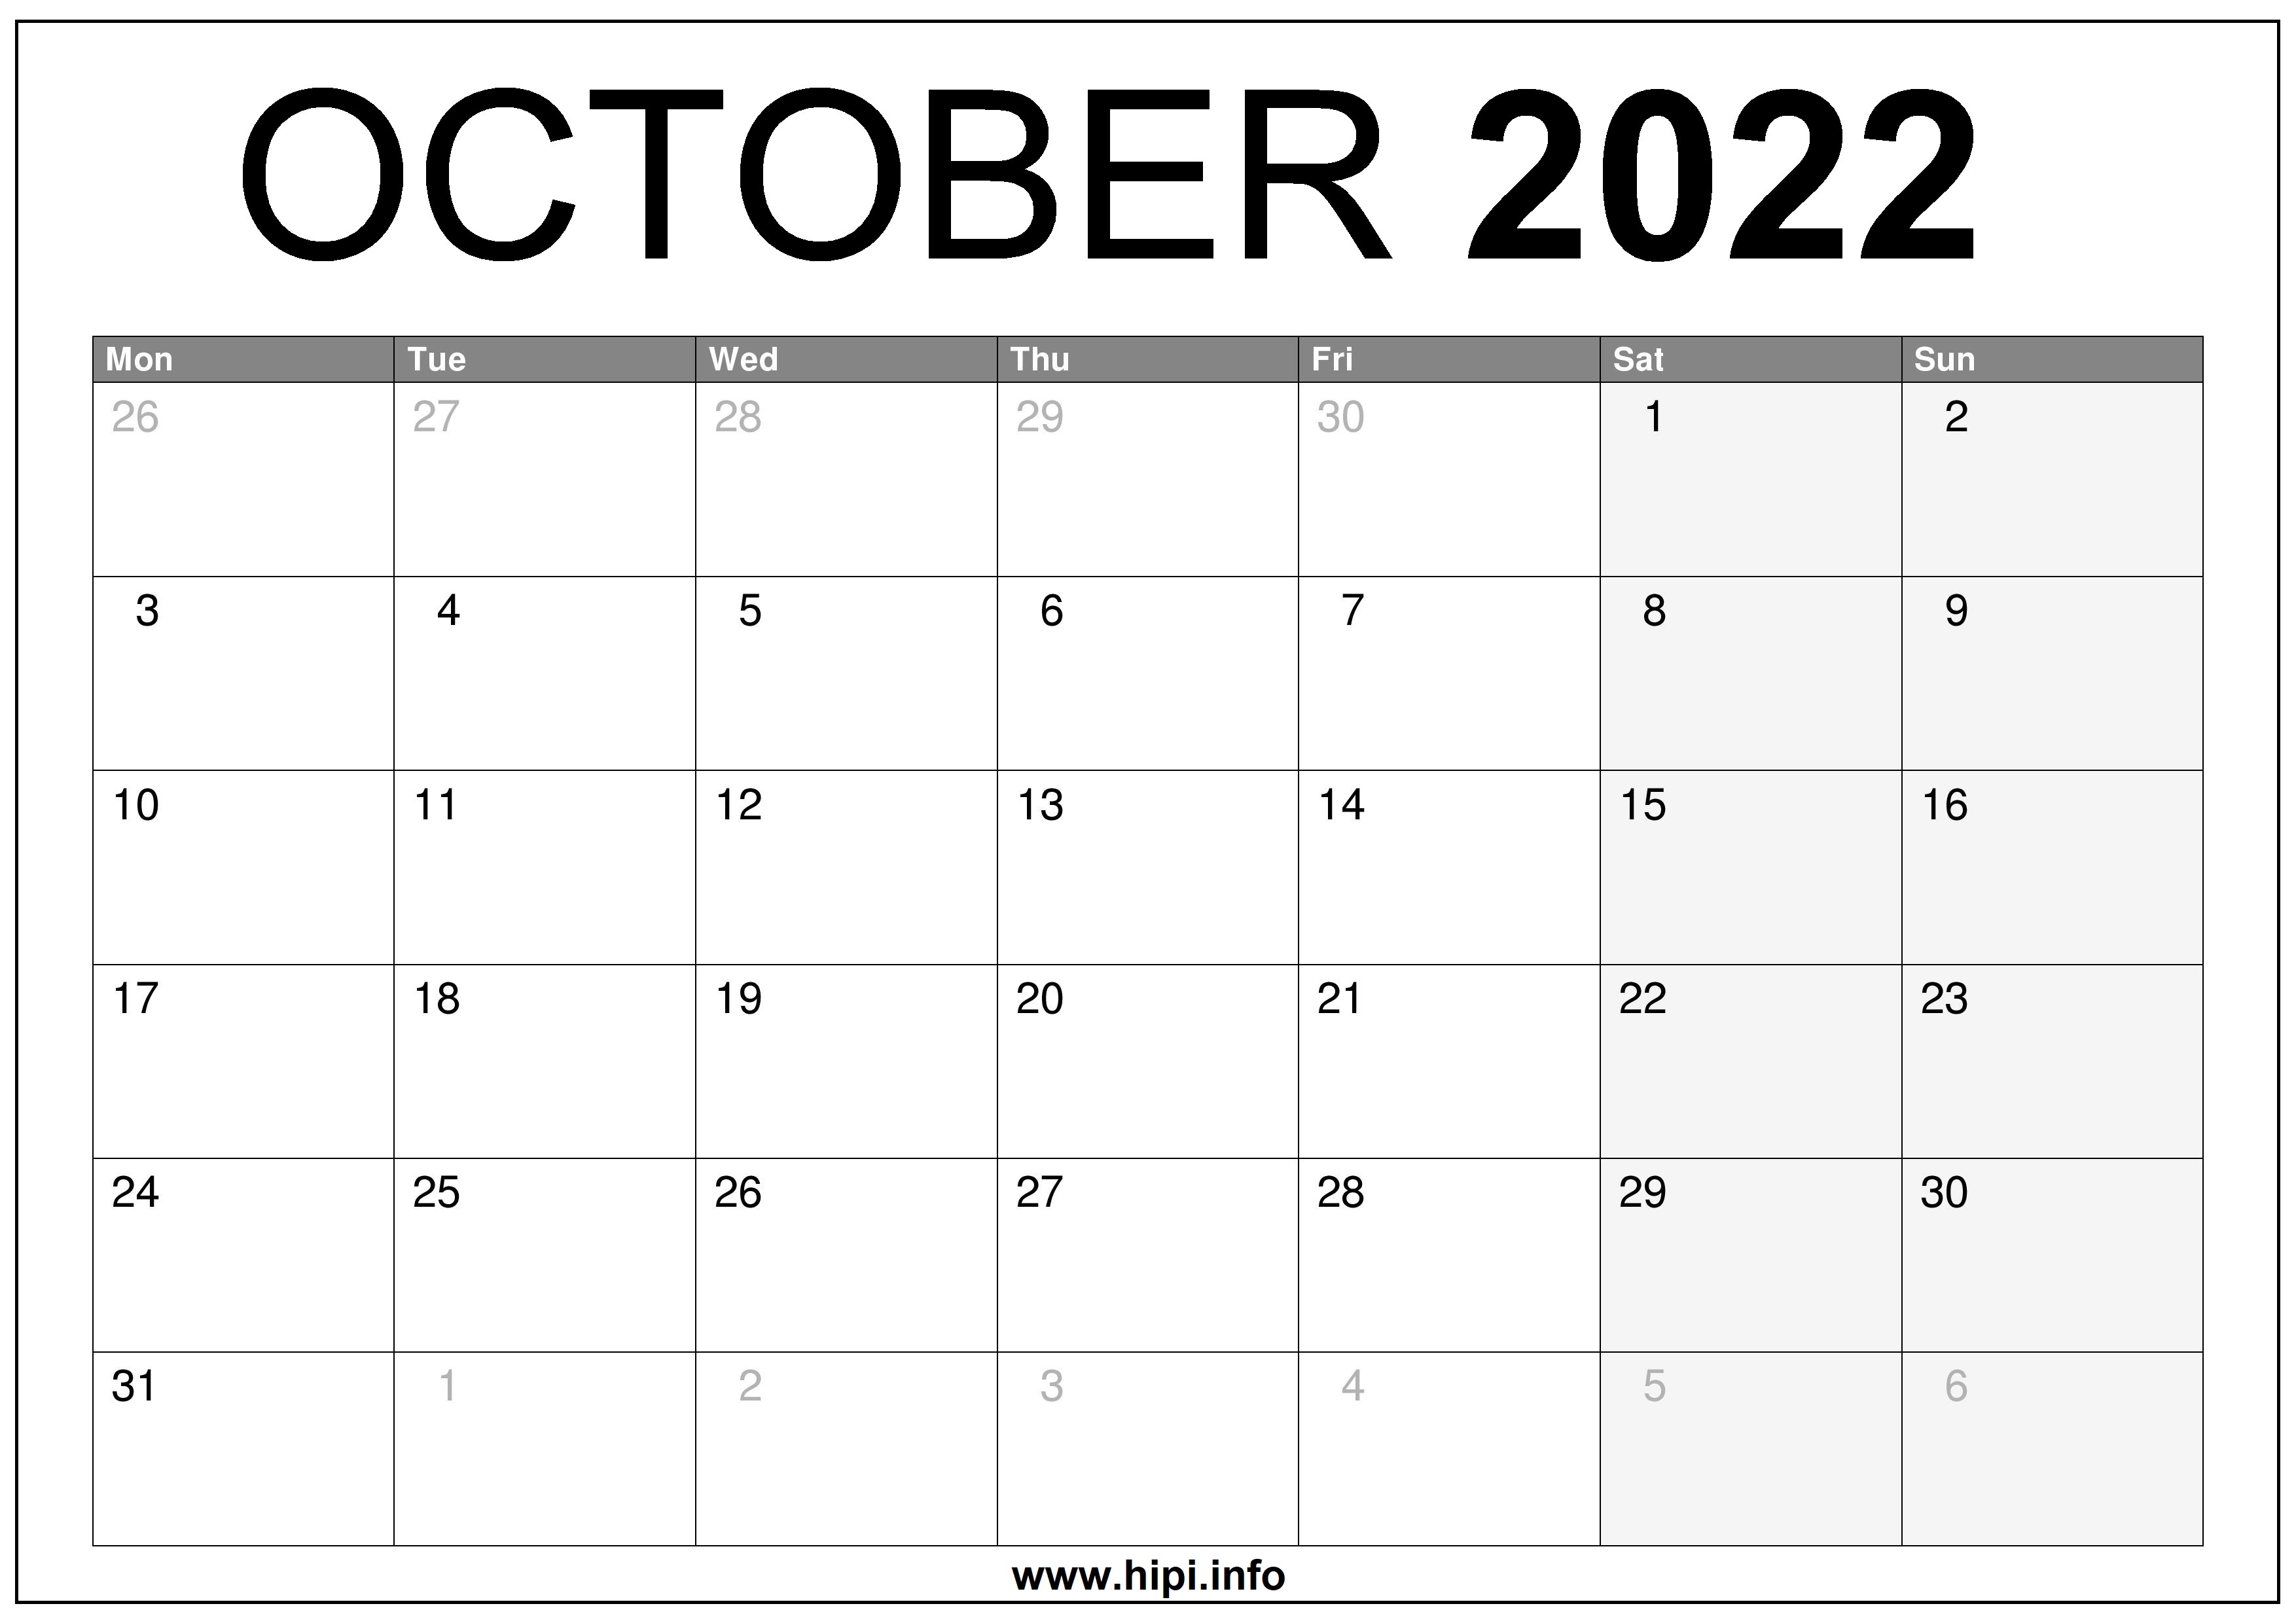 Free Printable Calendar For October 2022 October 2022 Uk Calendar Printable Free - Hipi.info | Calendars Printable  Free